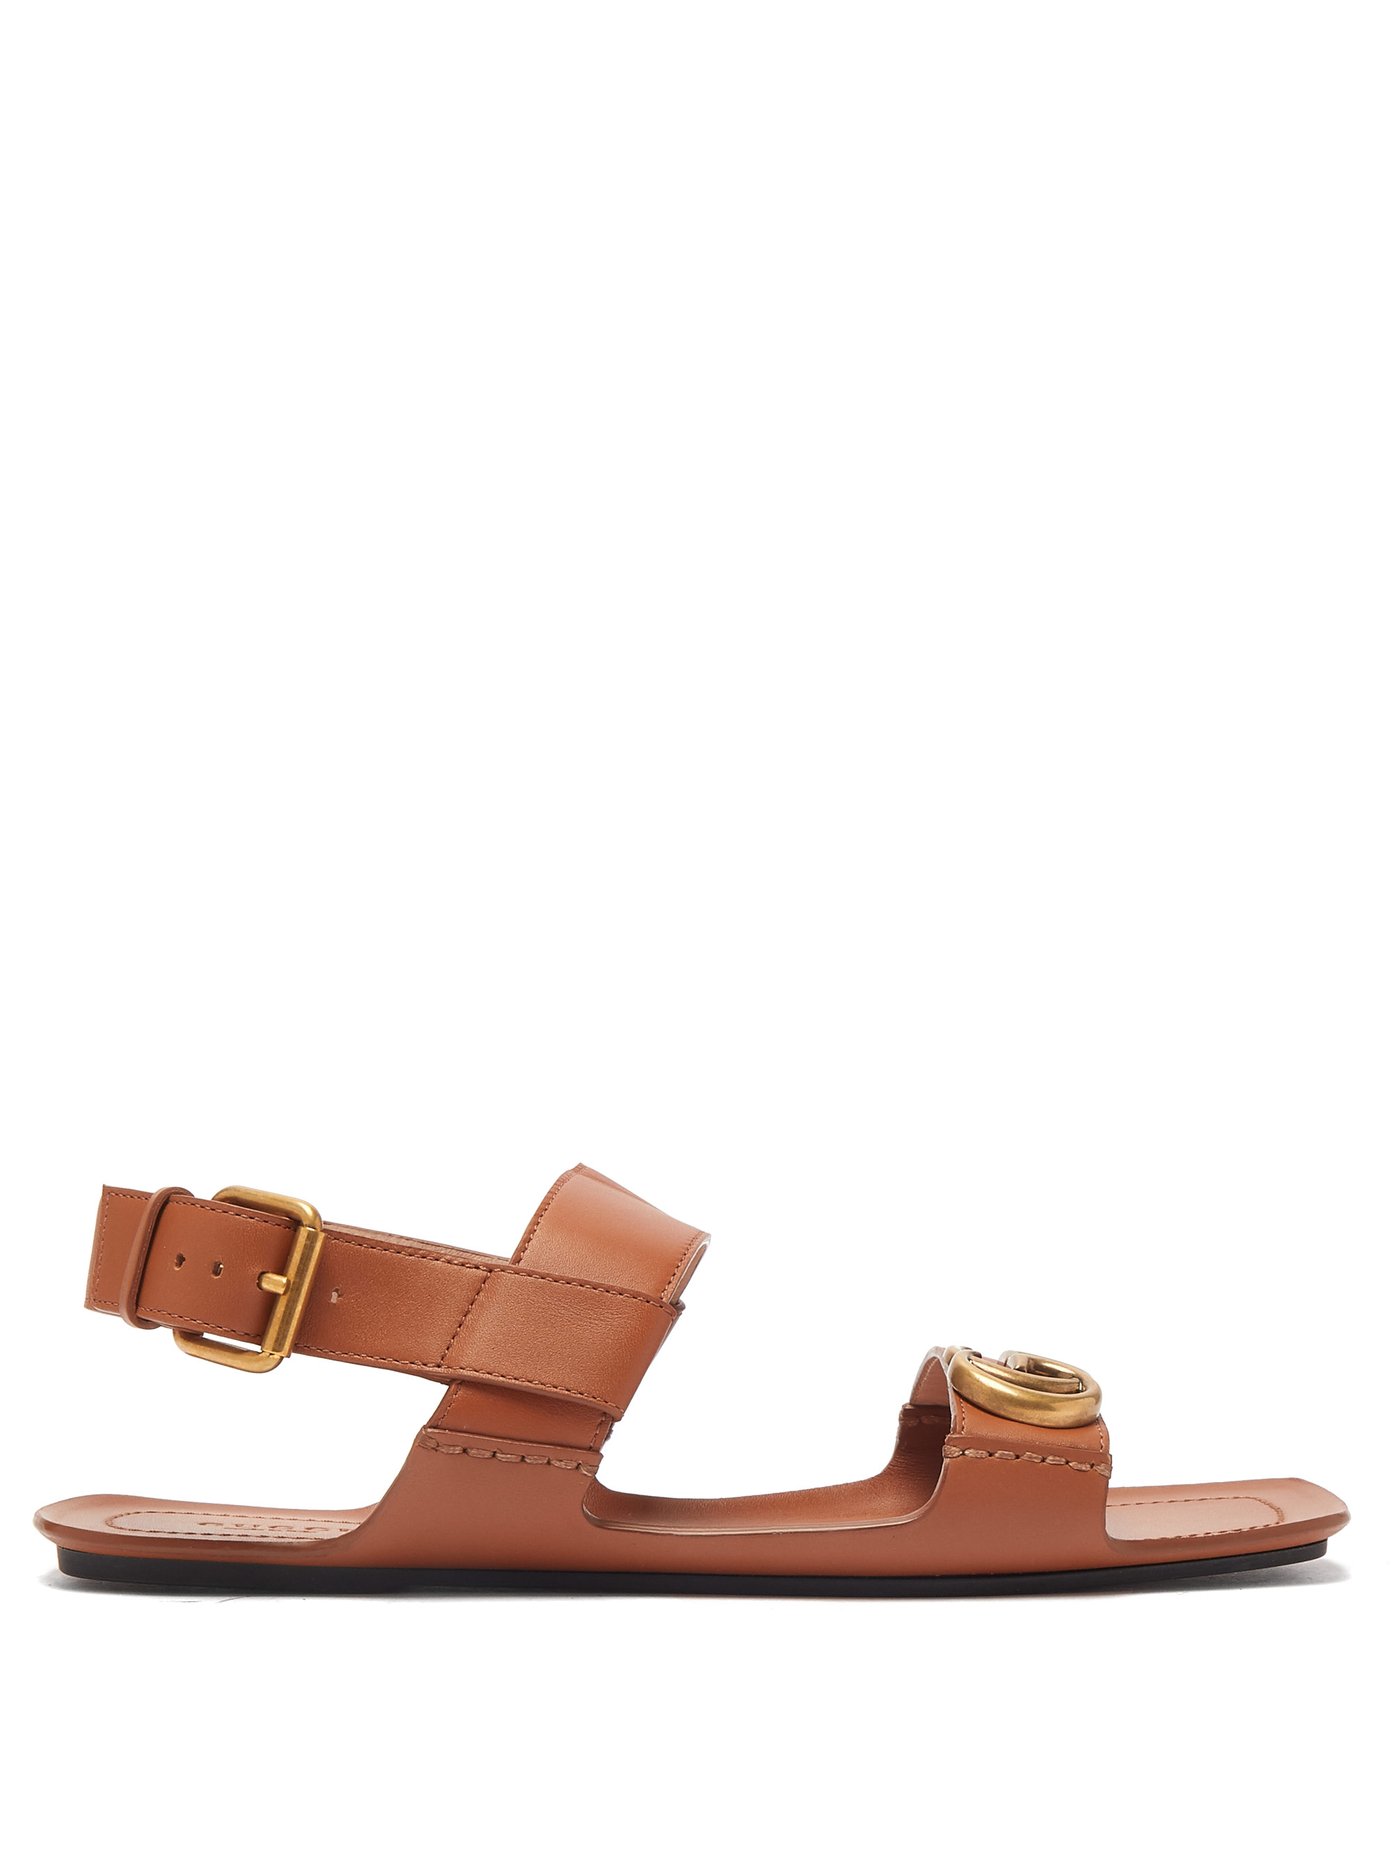 Sonique GG leather sandals | Gucci 